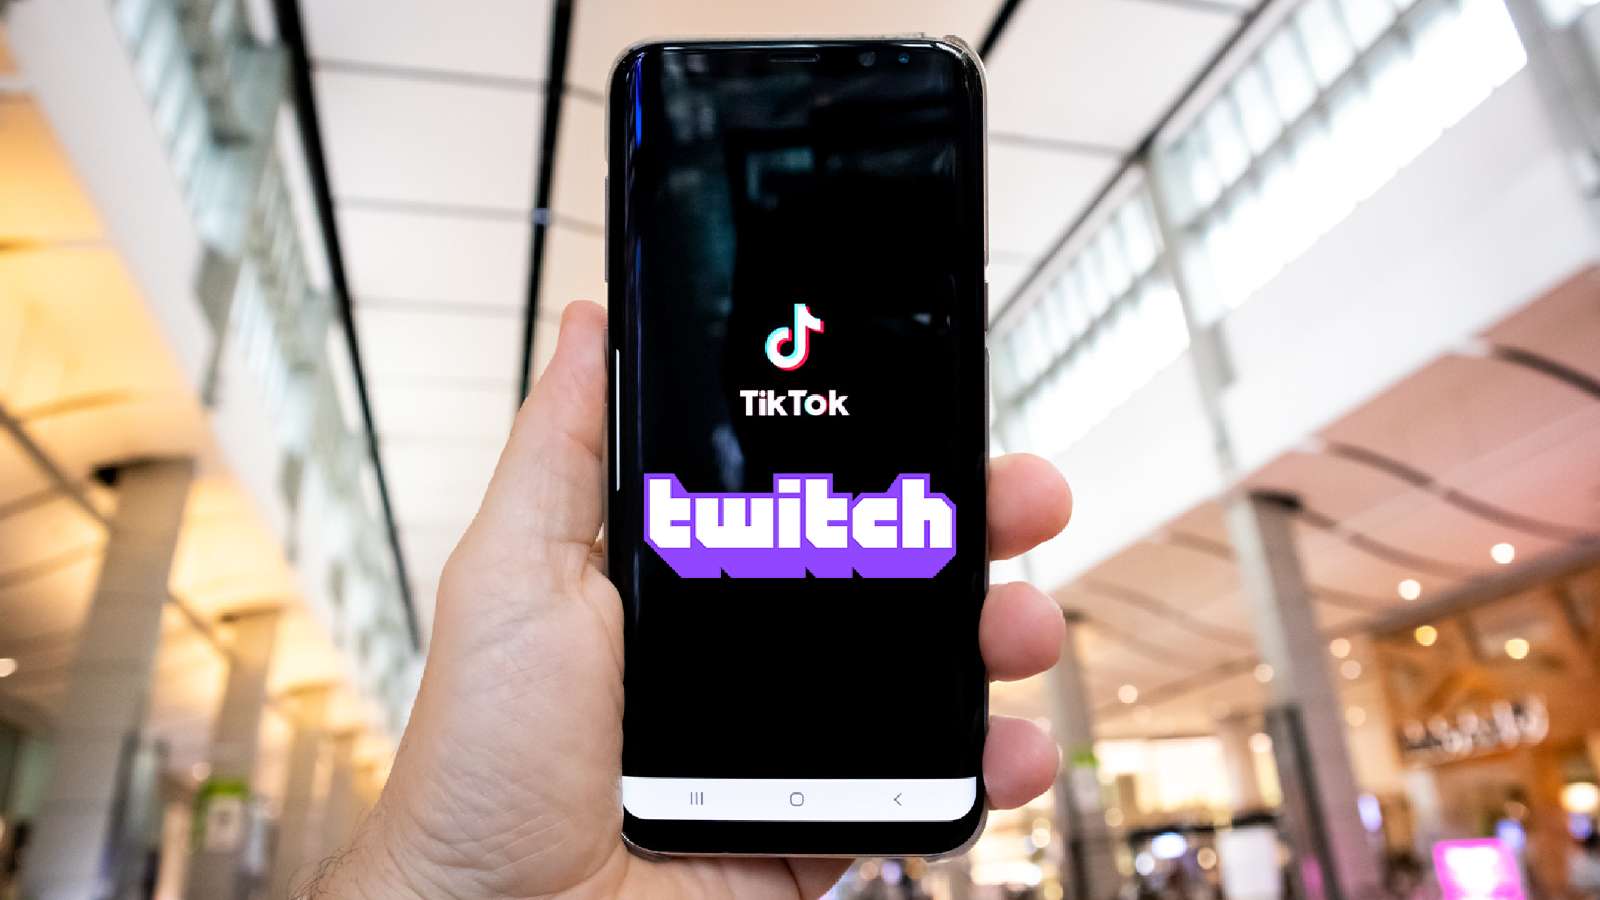 tiktok and twitch logos on phone